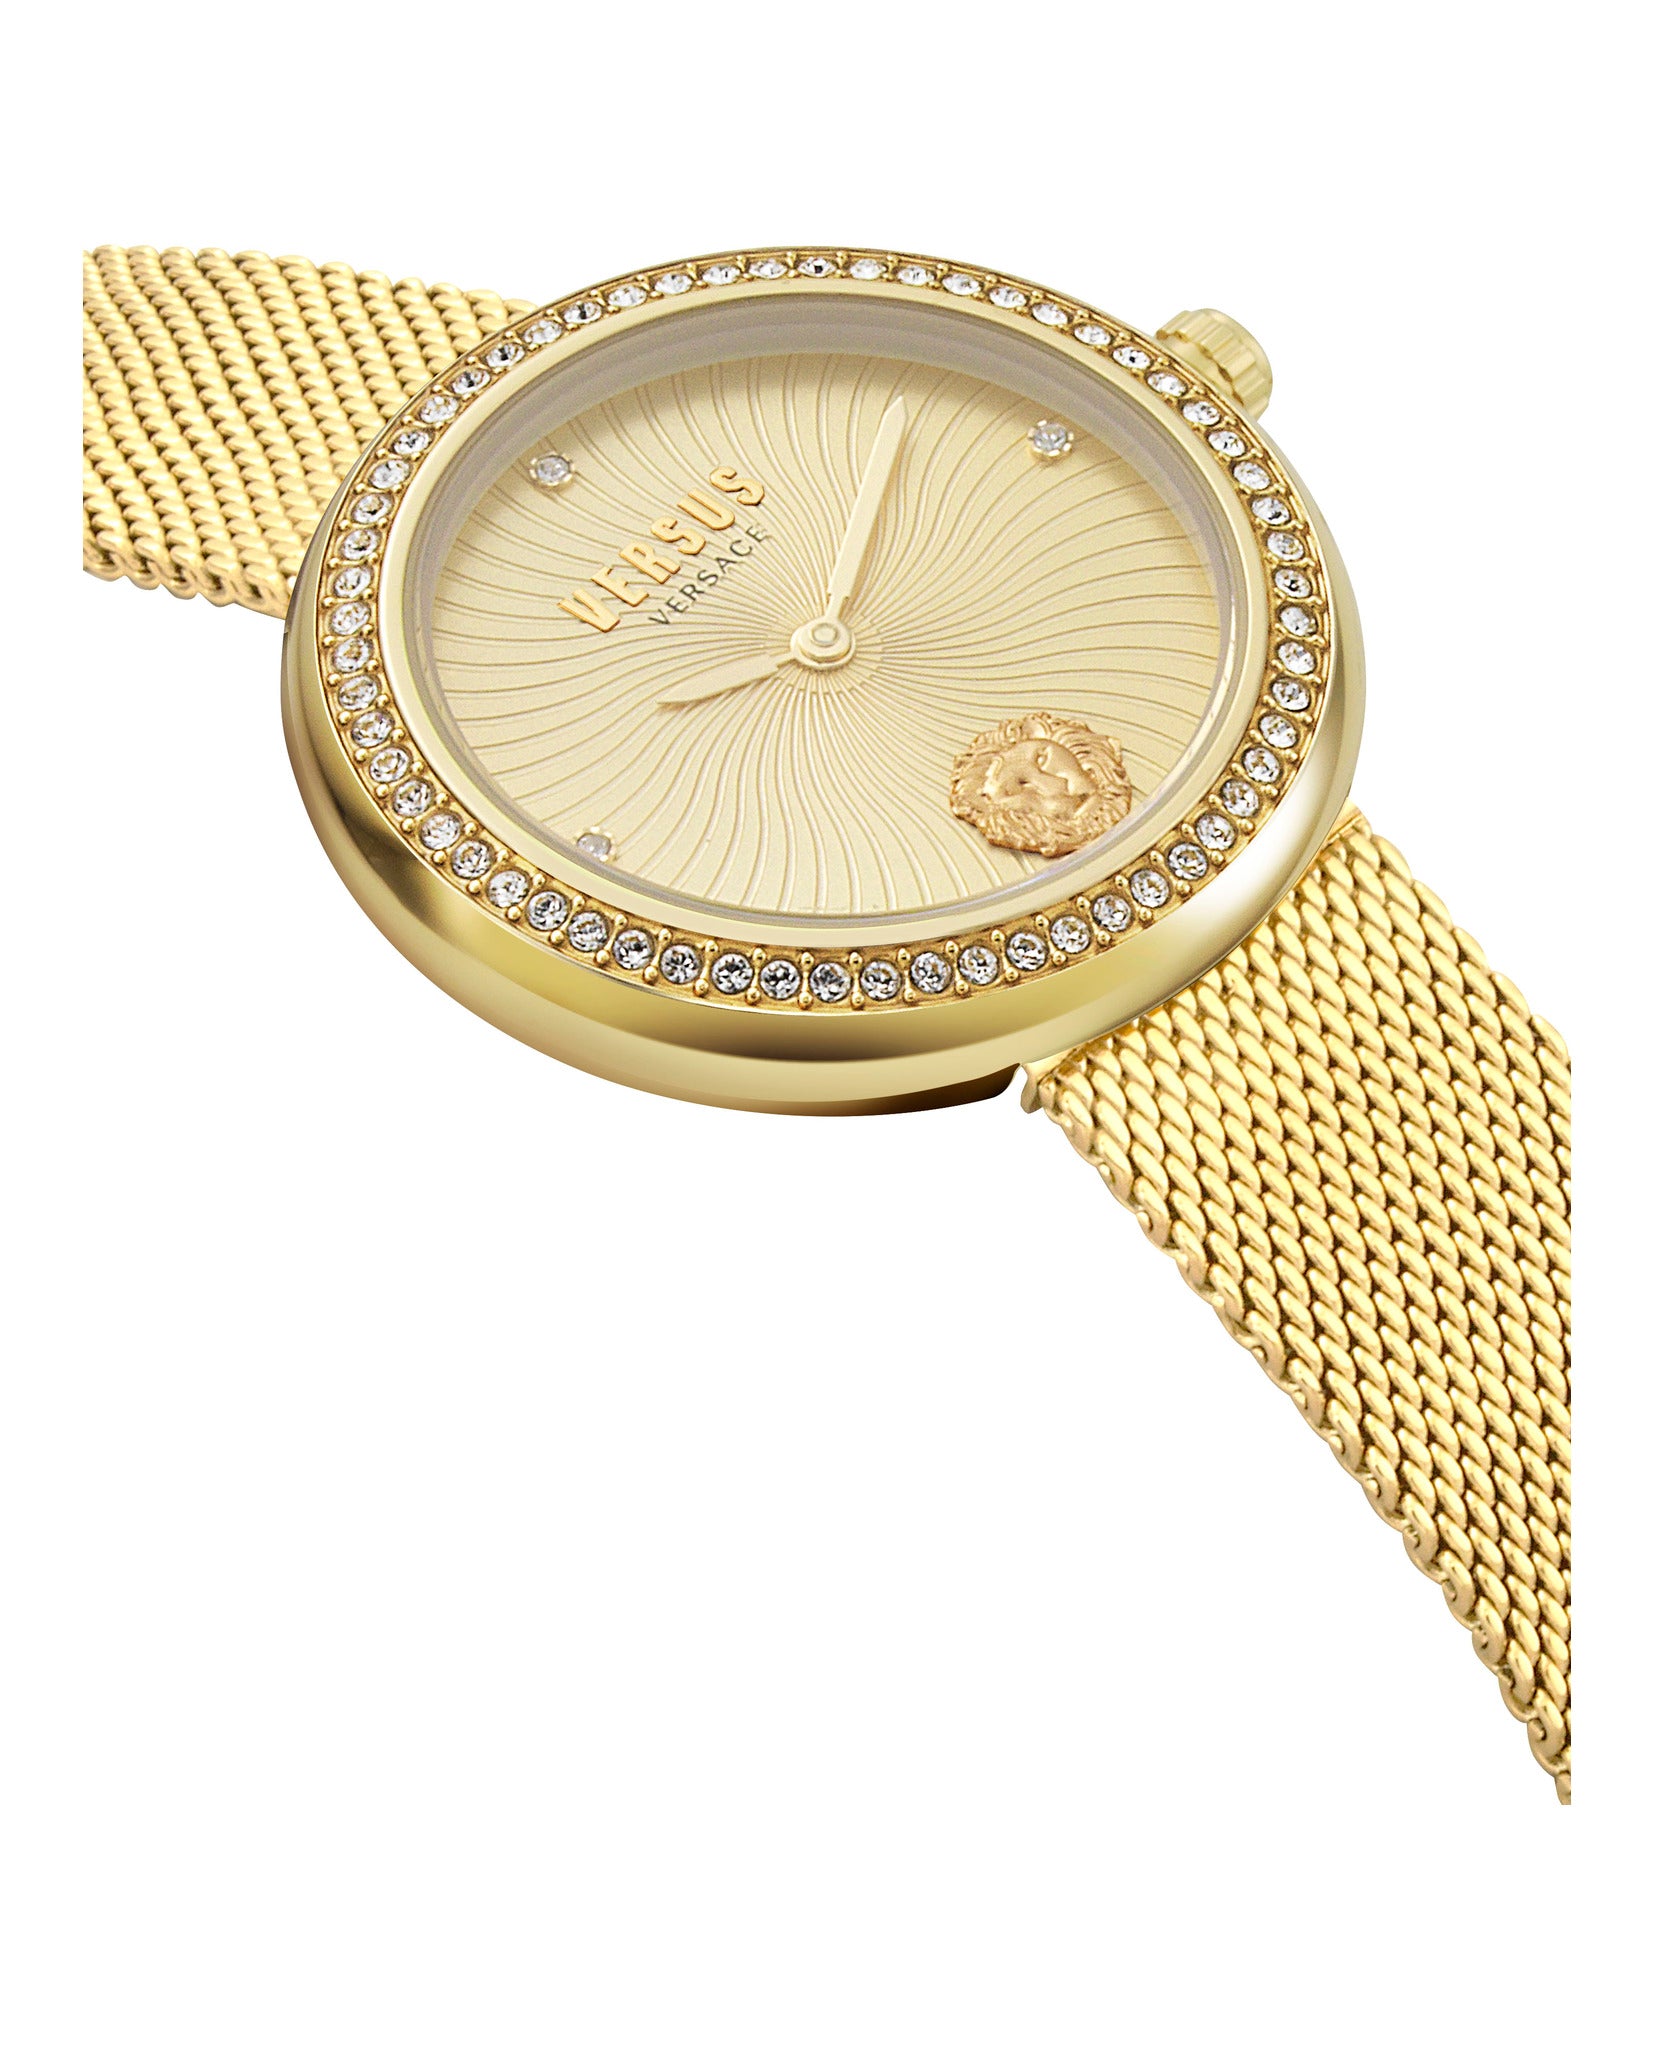 Lèa Bracelet Watch